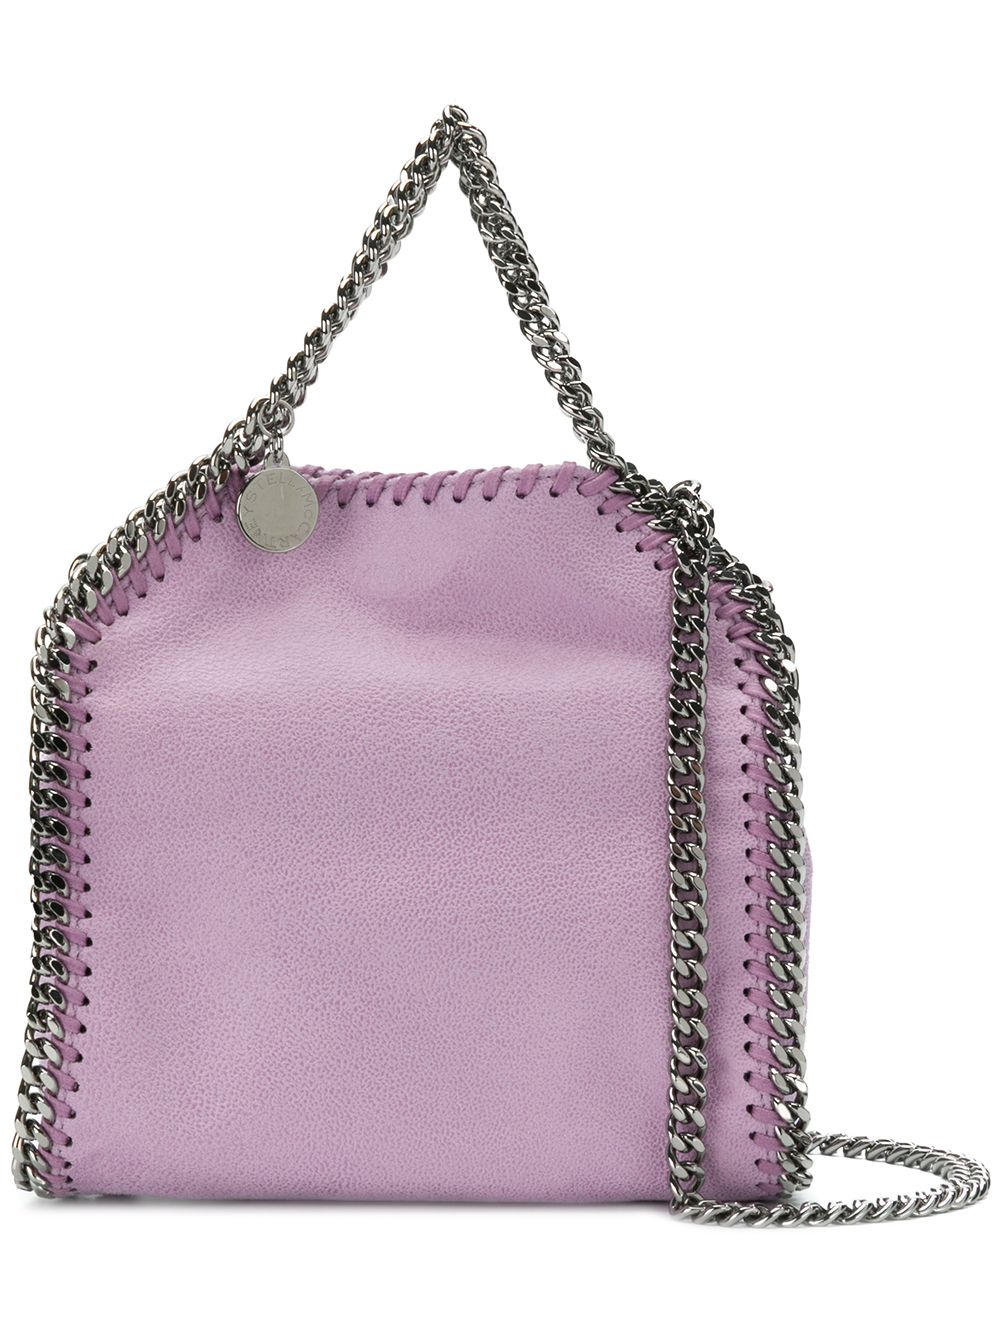 Stella McCartneyTiny Tote Bag at Fashion Clinic